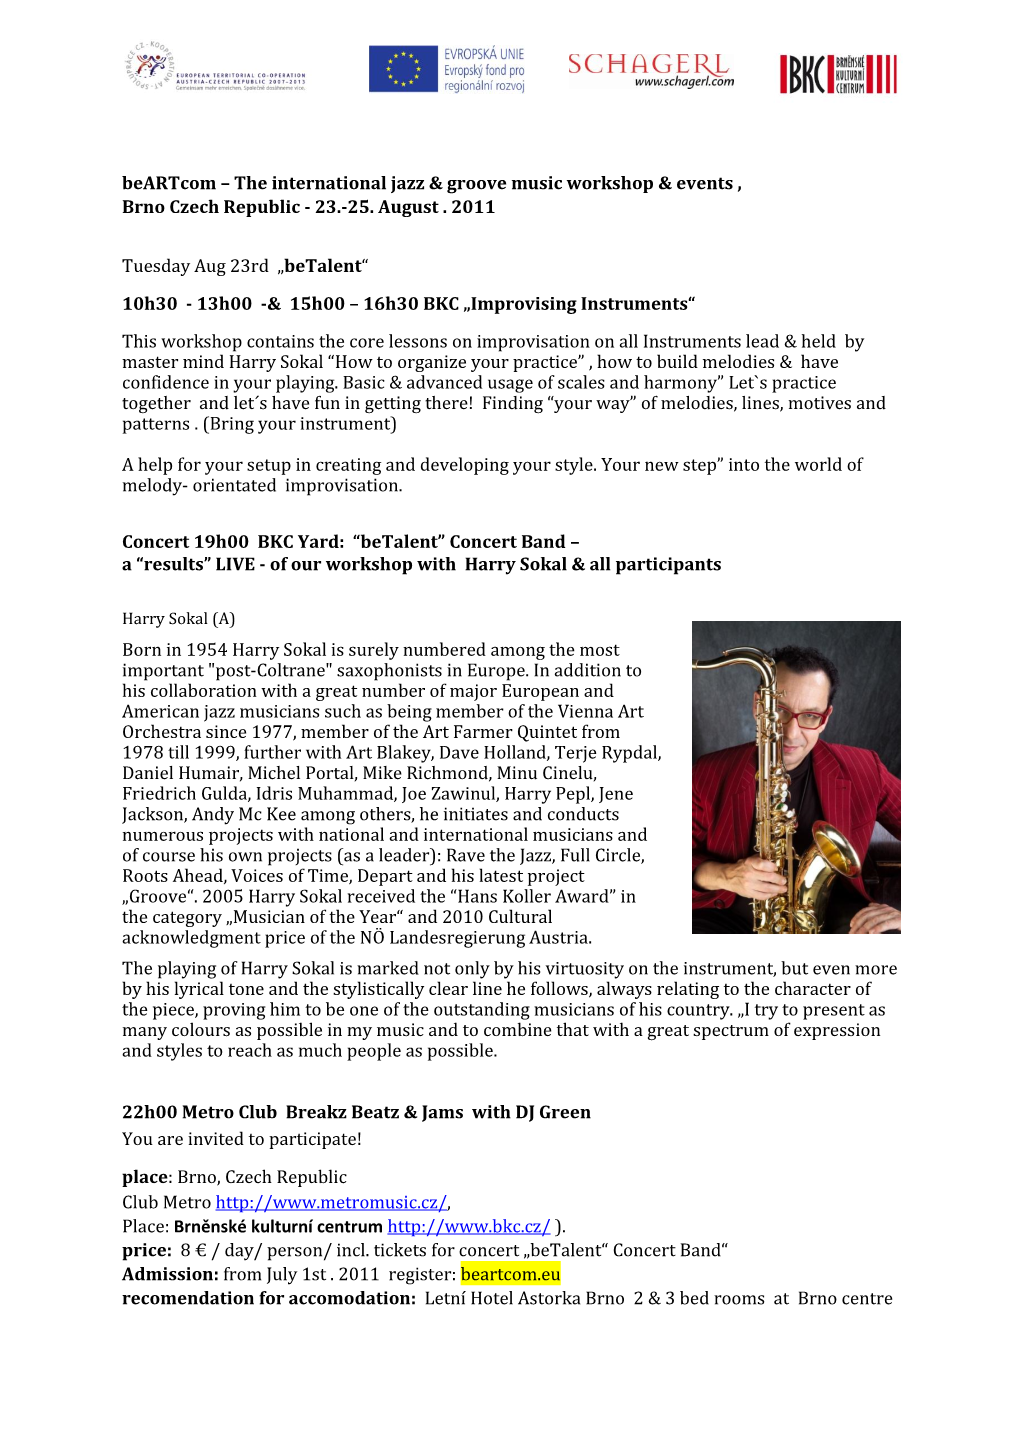 Beartcom – the International Jazz & Groove Music Workshop & Events